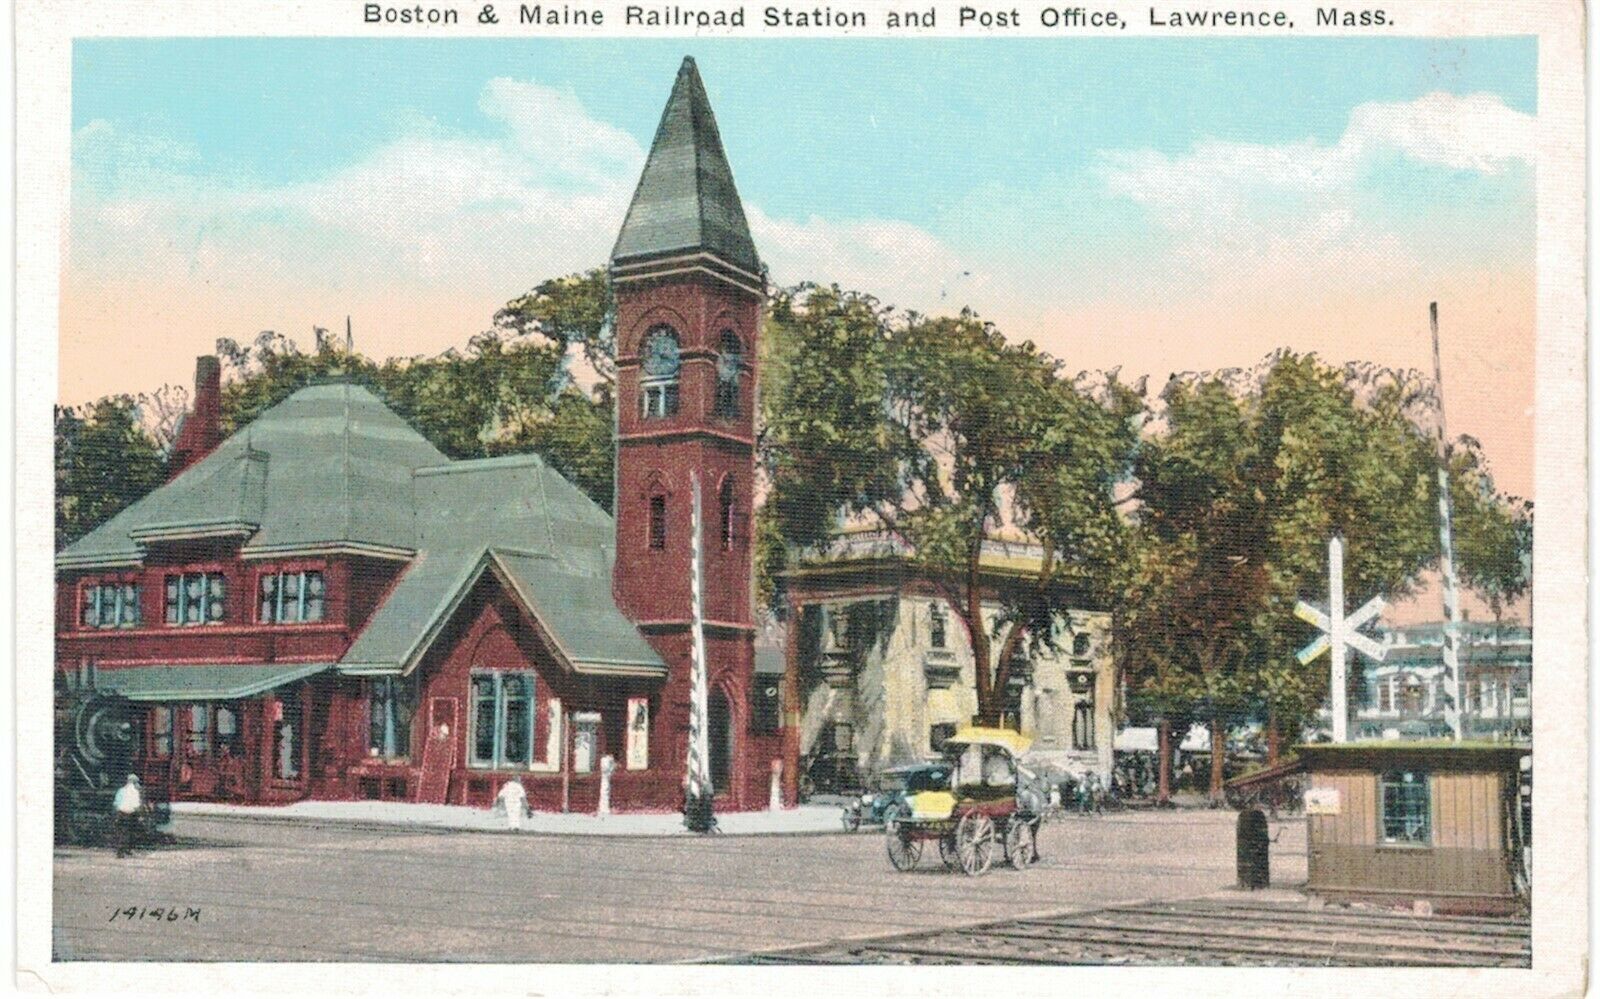 Lawrence Boston & Maine Railroad Station 1920 Ma